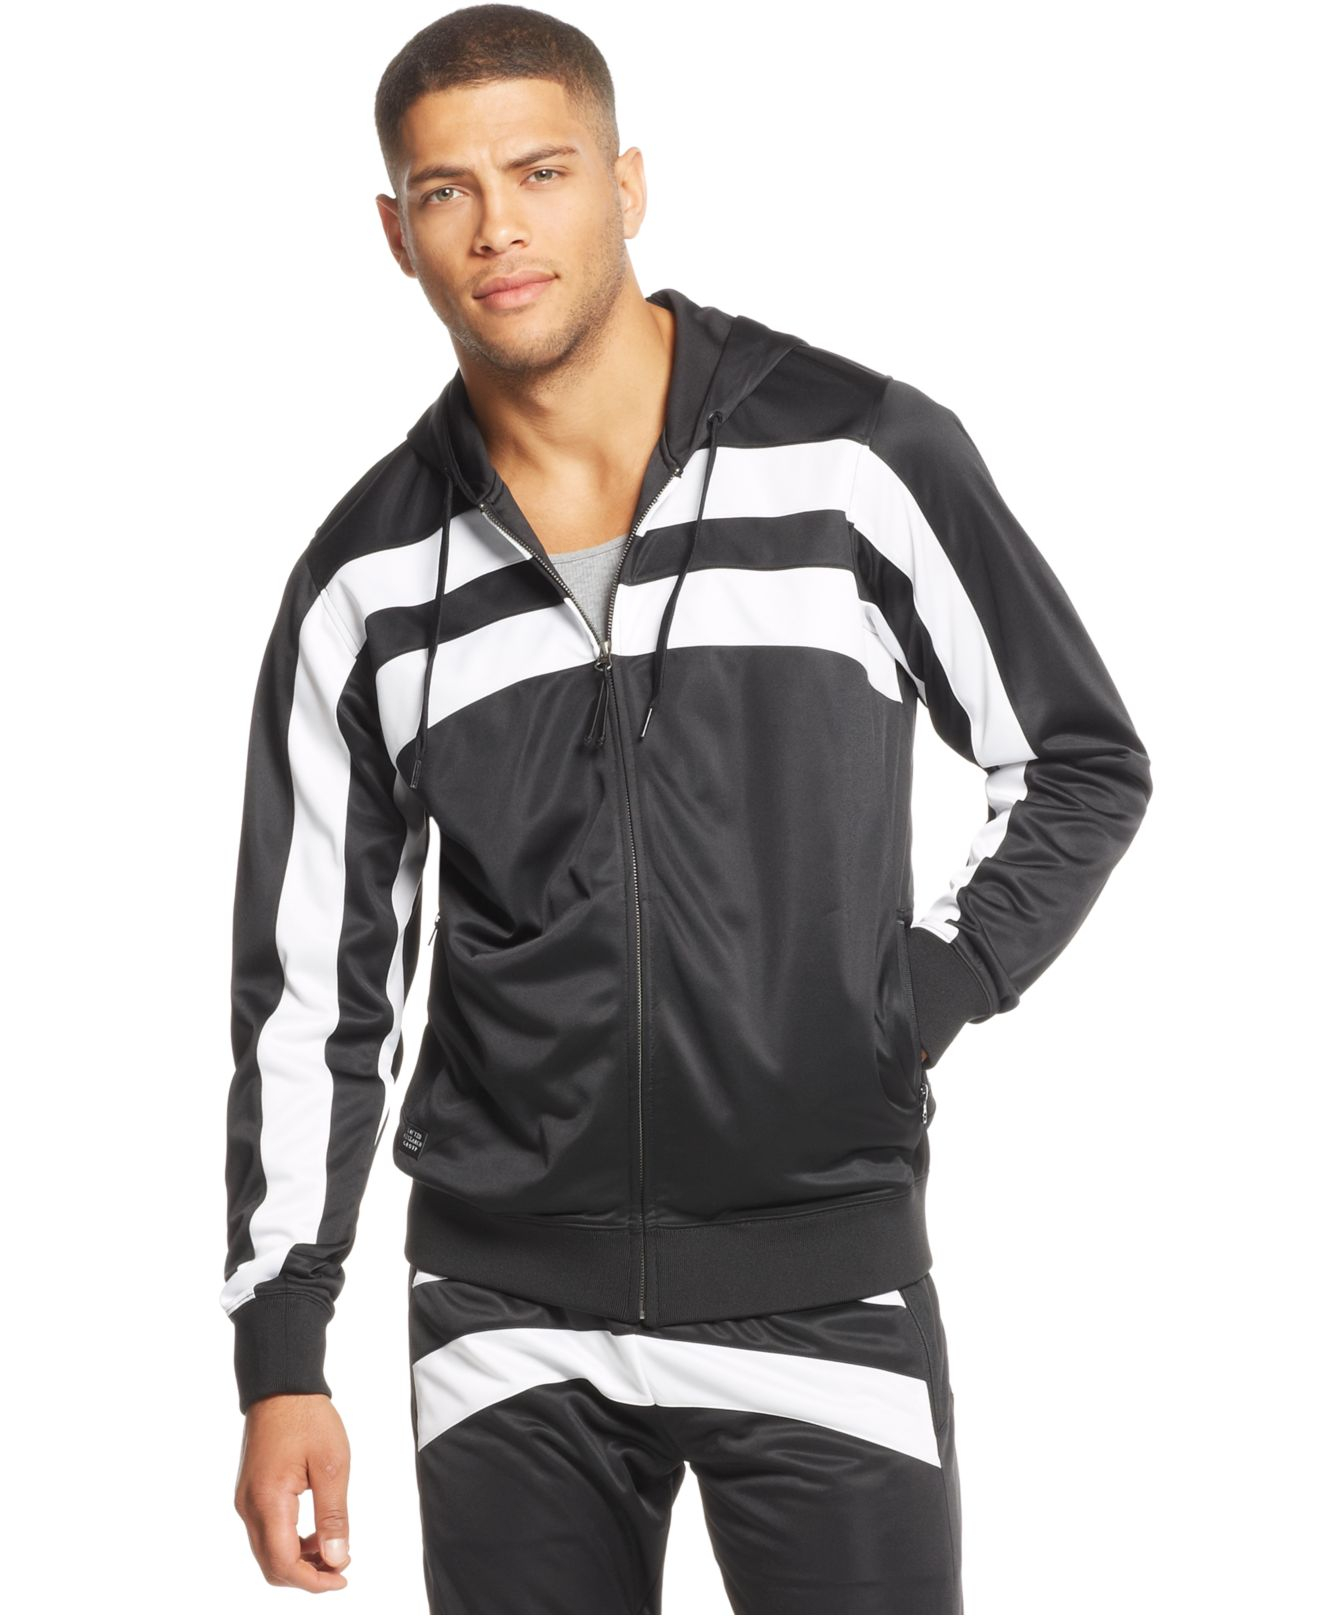 Lyst - Lrg Primo Striped Full-Zip Hoodie in Black for Men